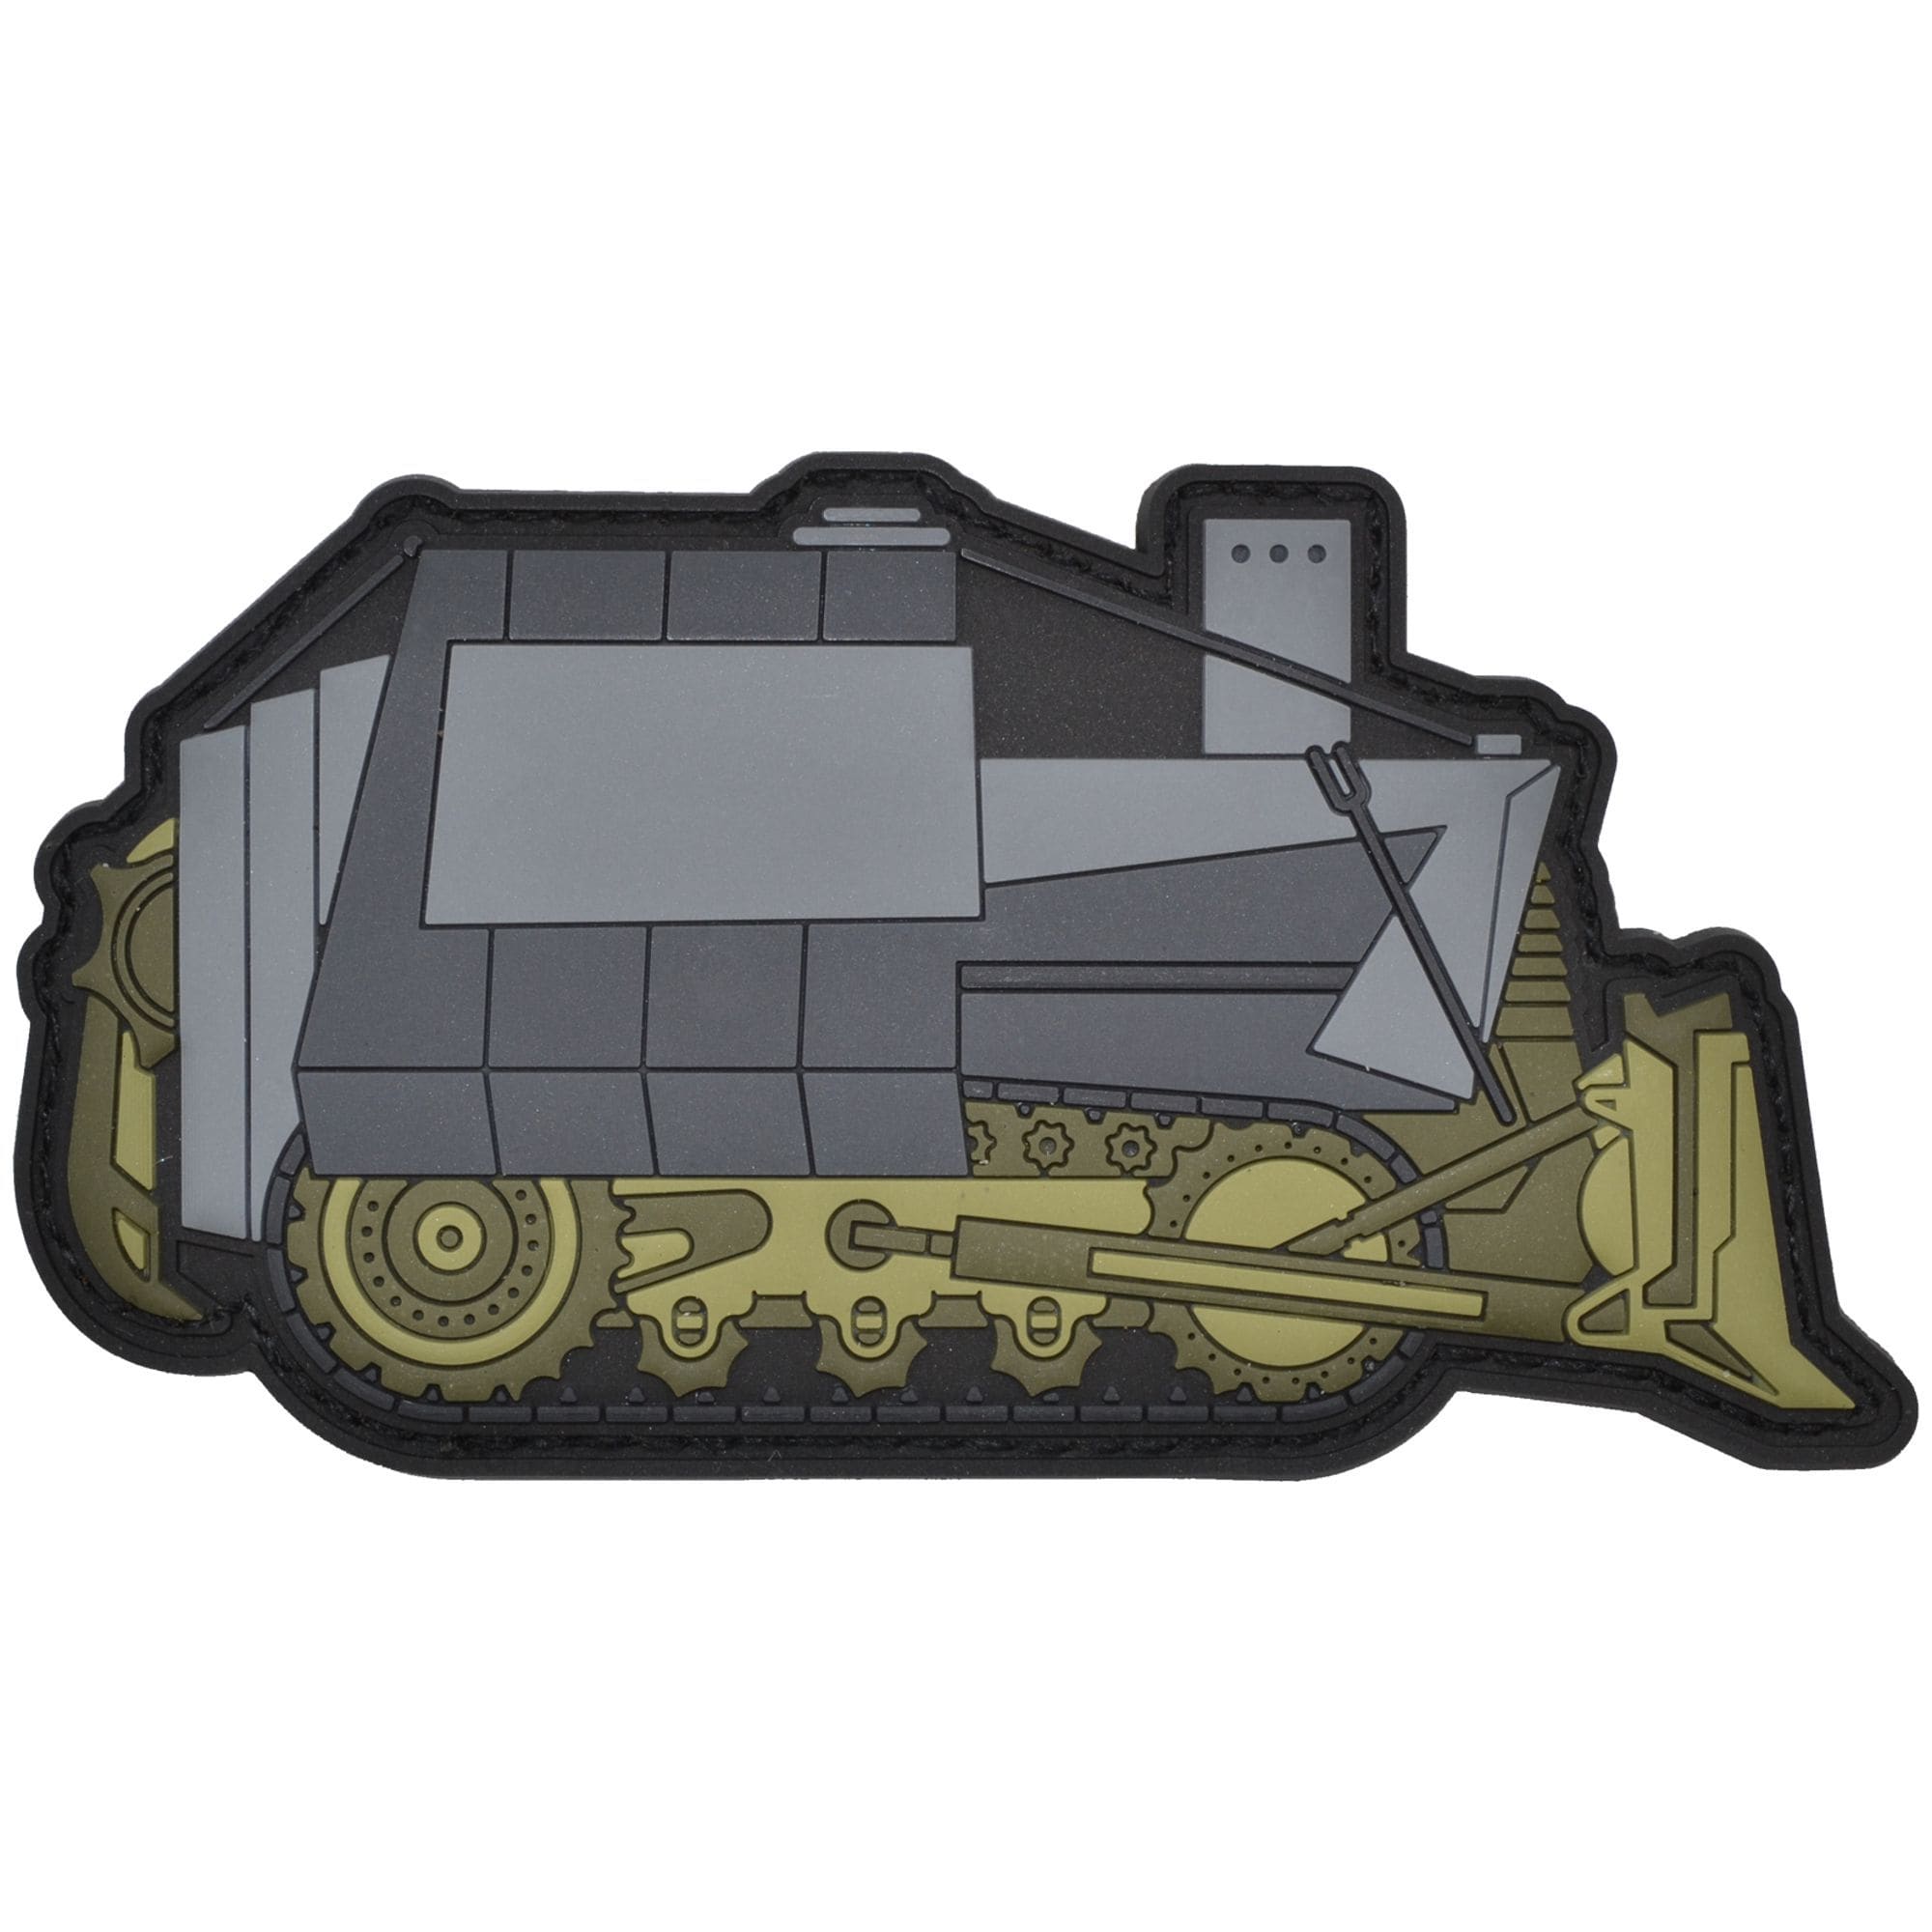 Tactical Gear Junkie Patches Olive Drab Killdozer - 2x4 PVC Patch - Multiple Colors